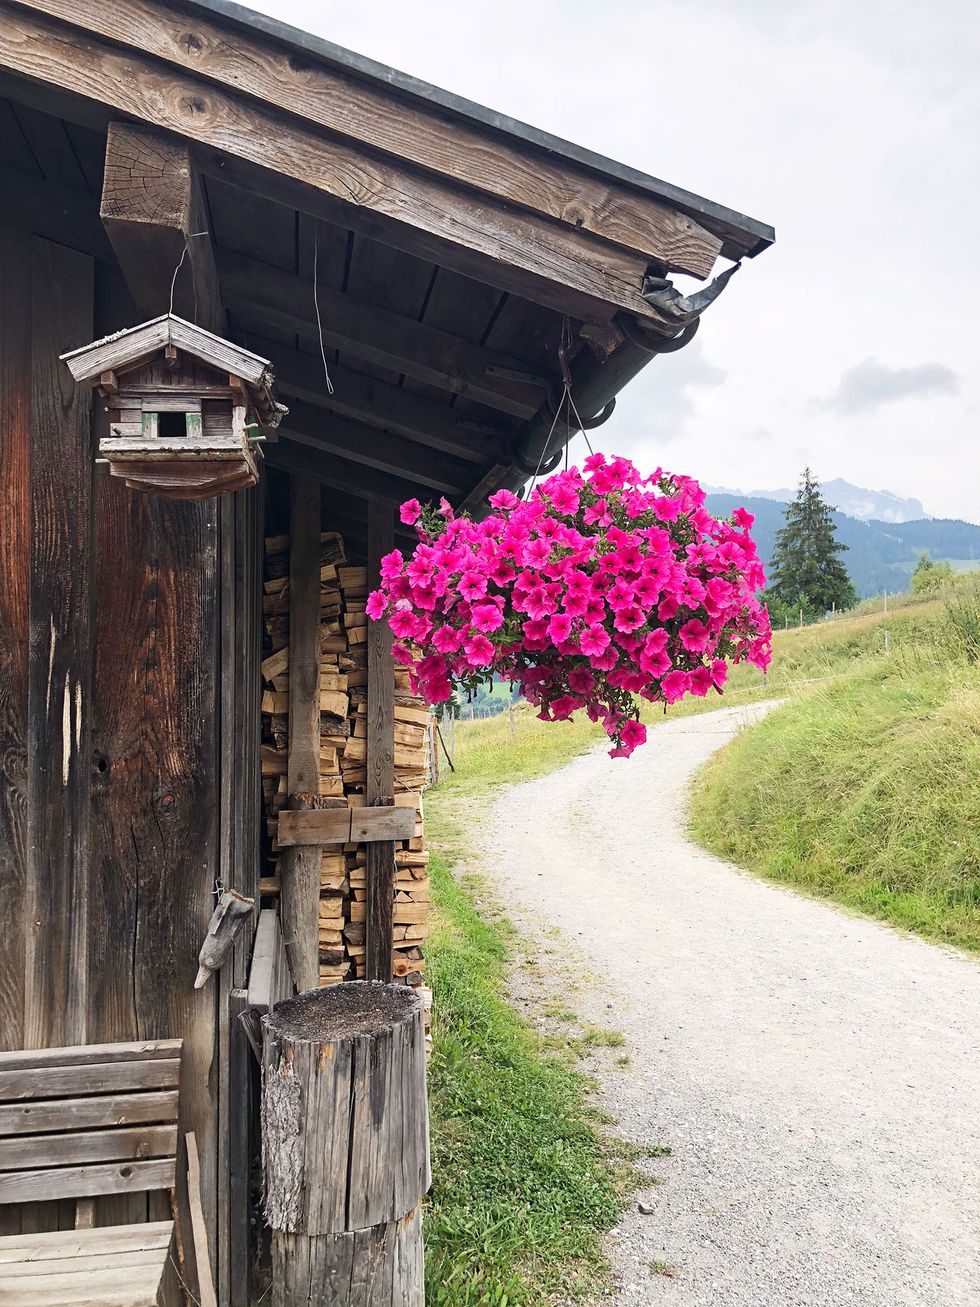 Austria flower displays